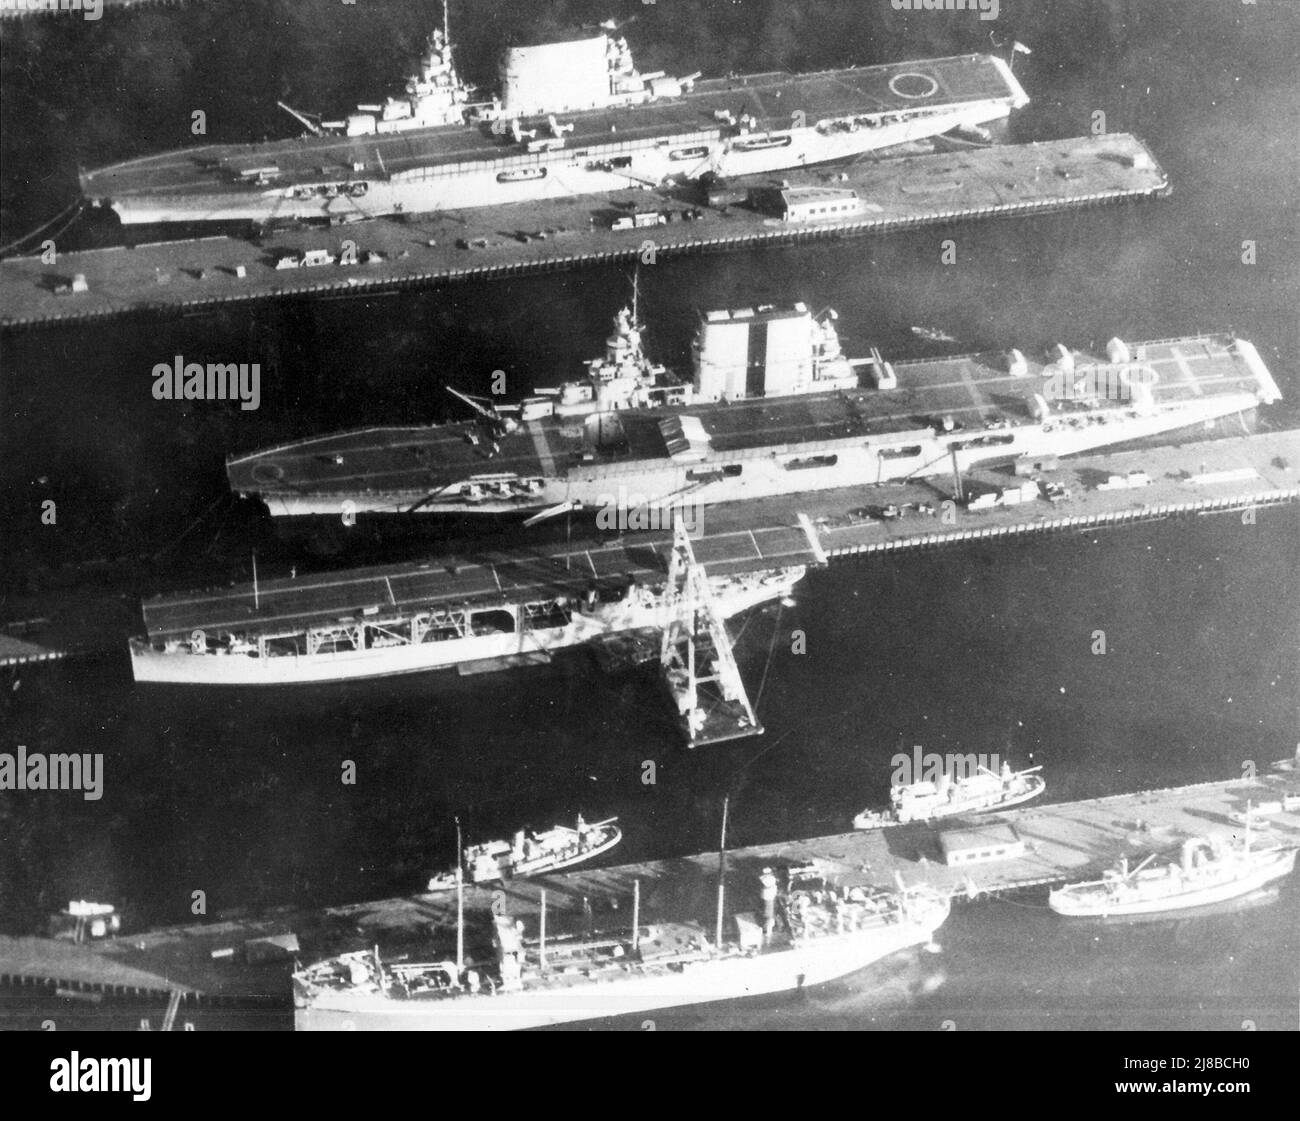 The U.S. aircraft carriers USS Lexington (CV-2) (top), USS Saratoga (CV-3) (middle), and USS Langley (CV-1) (bottom) moored at the Puget Sound Naval Shipyard, Bremerton, Washington (USA), in 1929. Stock Photo